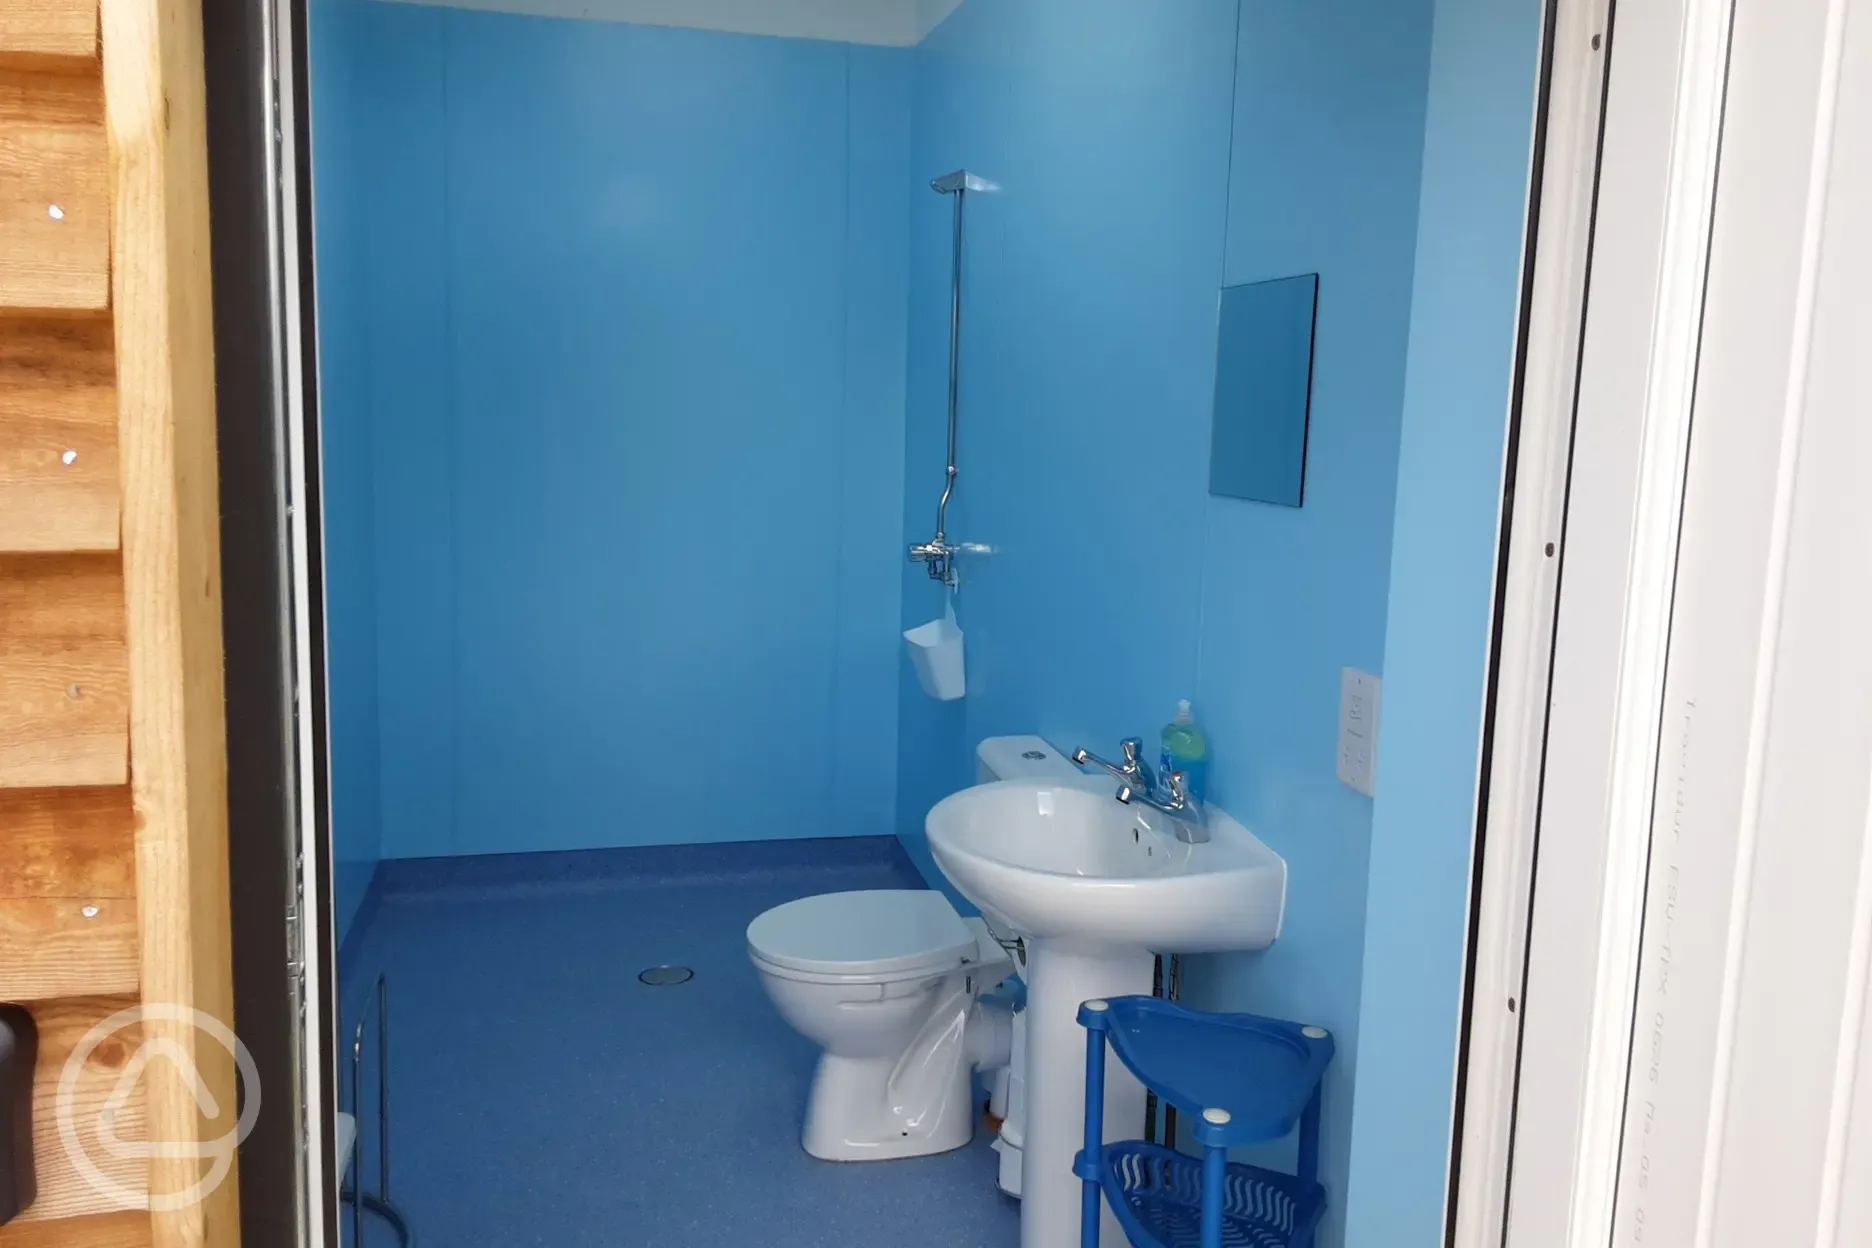 Shower, toilet room with heated floor